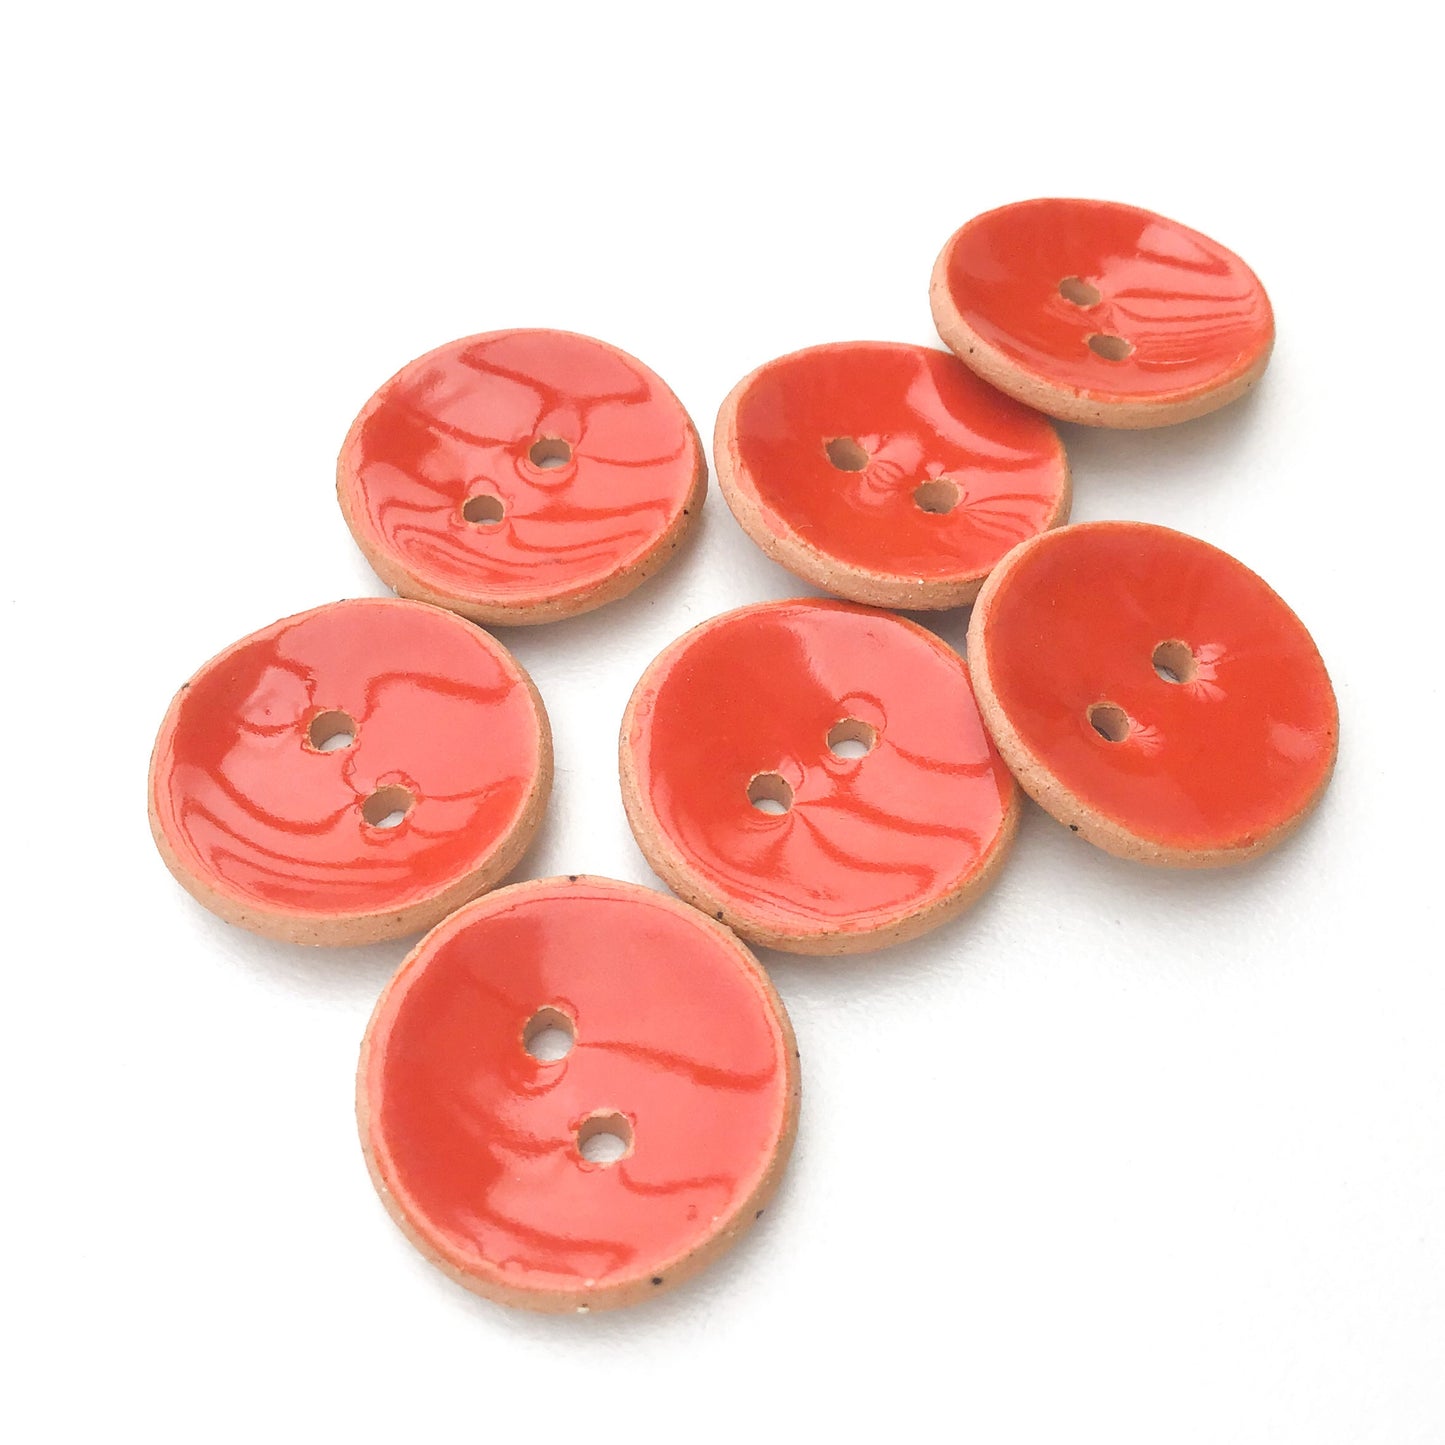 Reddish-Orange Ceramic Buttons - Dark Orange Clay Buttons - 3/4" - 7 Pack (ws-178)